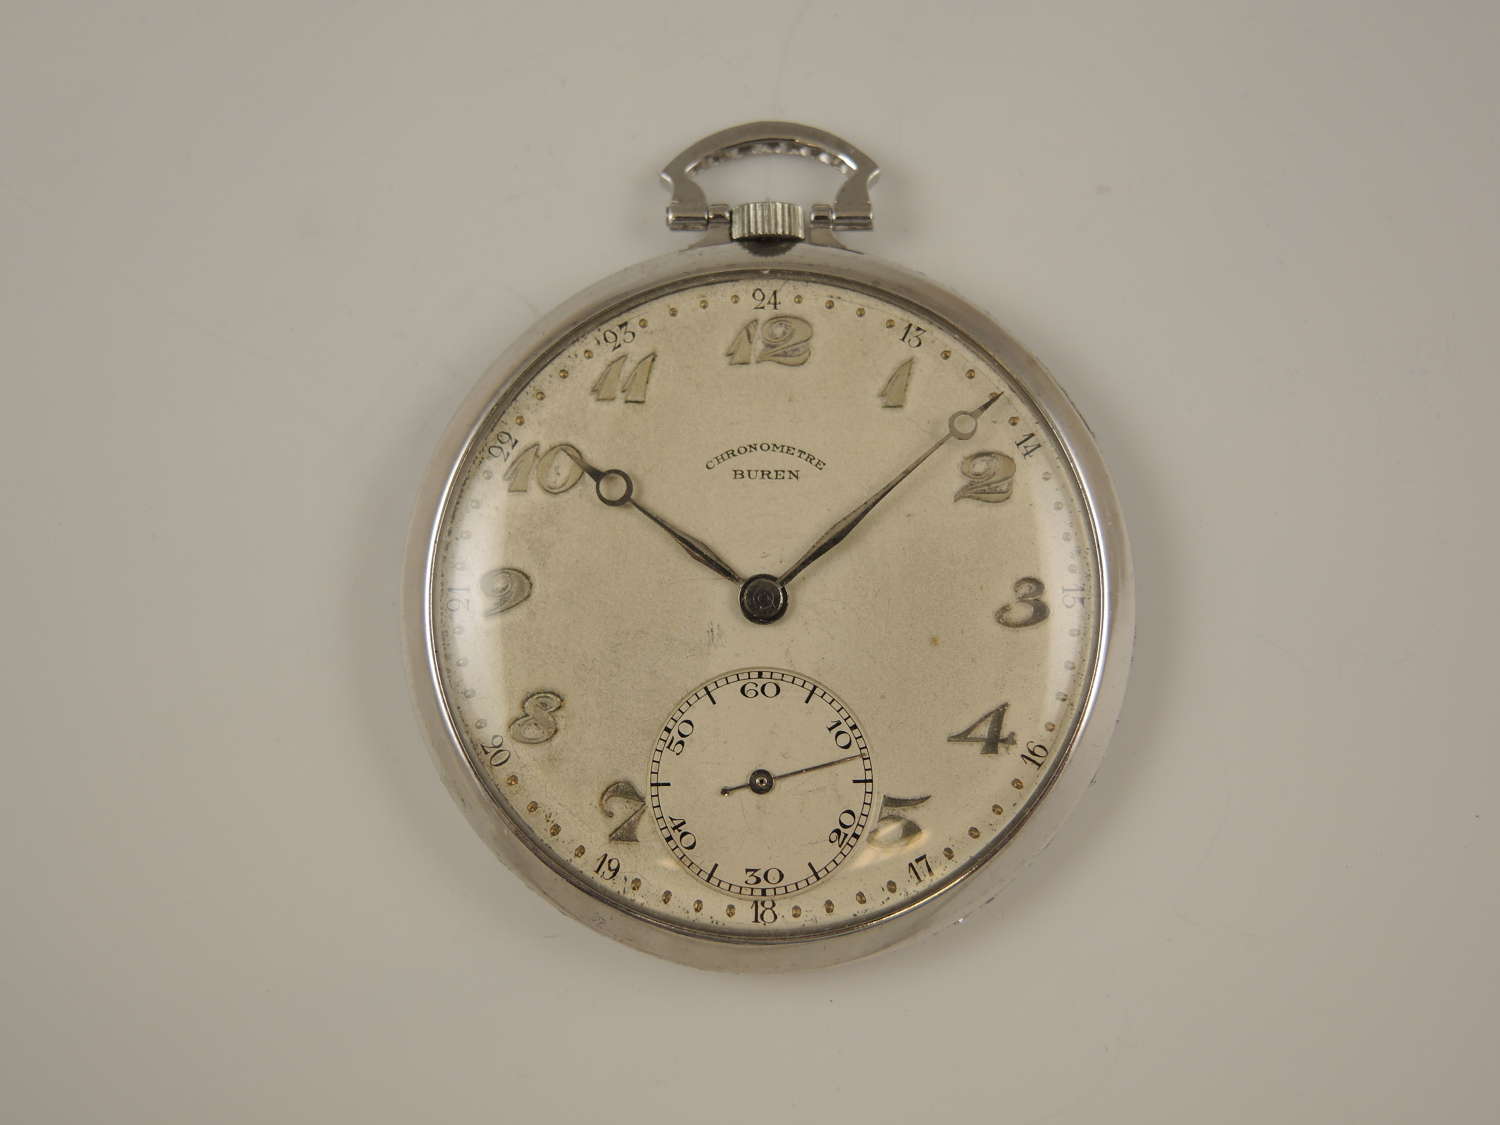 Exquisite diamond set platinum pocket watch by Buren c1925